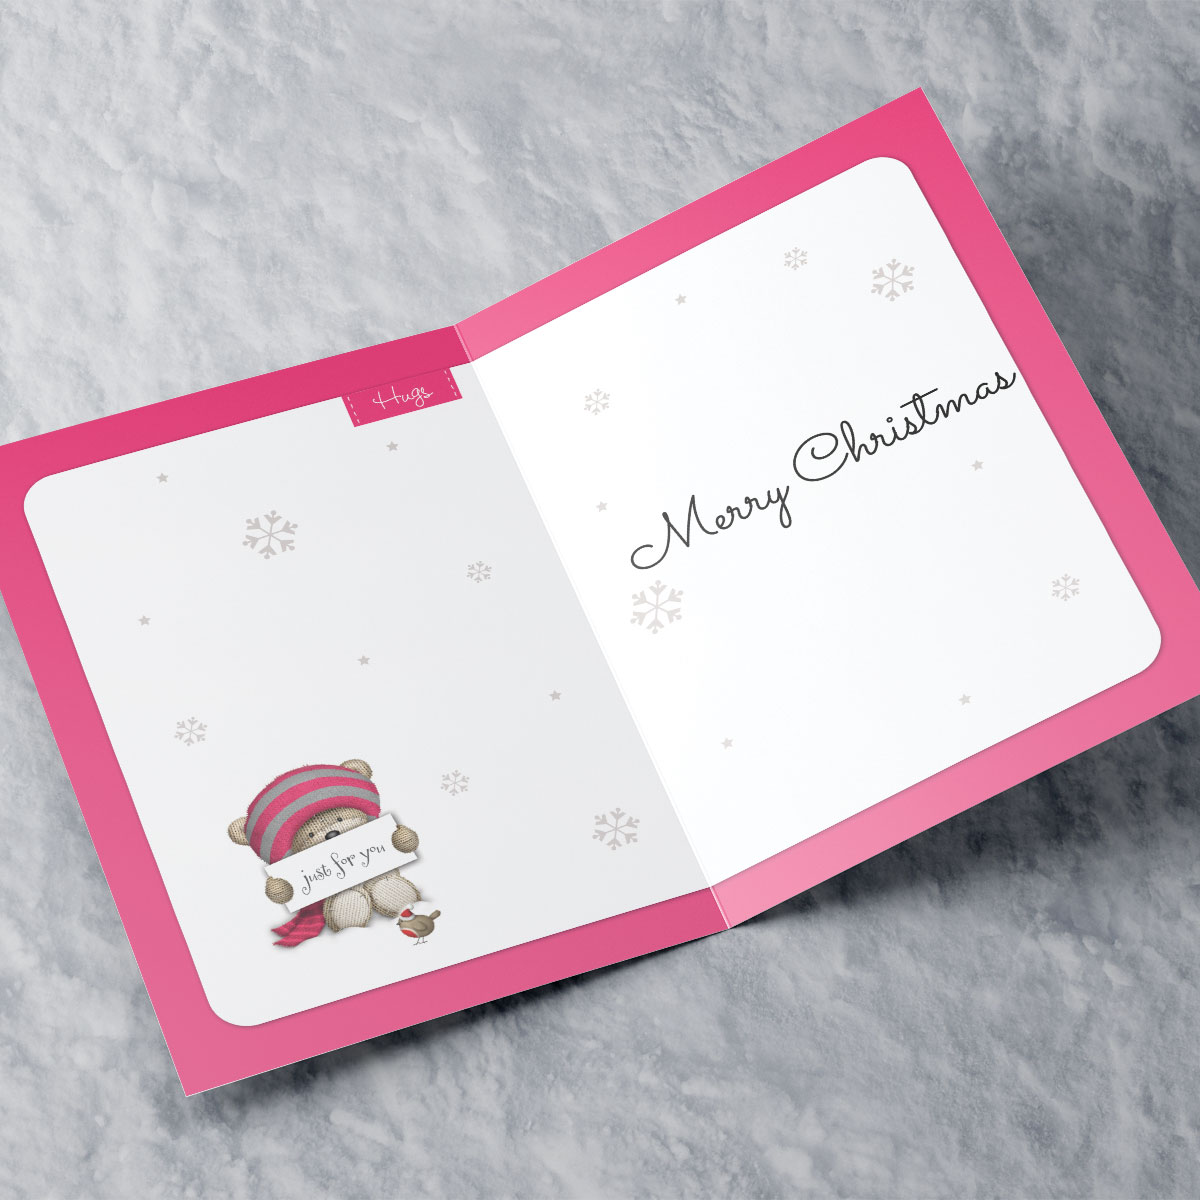 Personalised Hugs Christmas Card - Pink Bear - Daughter